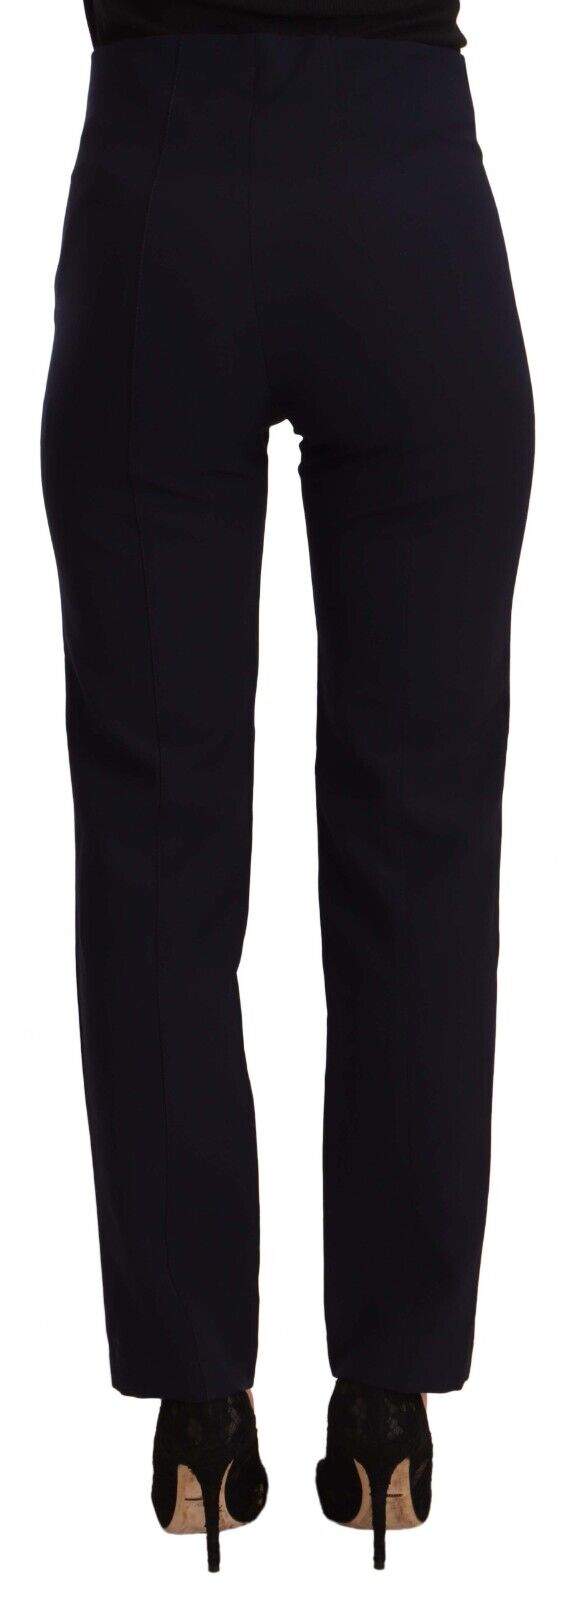 AGLINI Black High Waist Polyester  Straight Pants AGLINI, Black, feed-1, IT40|S, Jeans & Pants - Women - Clothing at SEYMAYKA